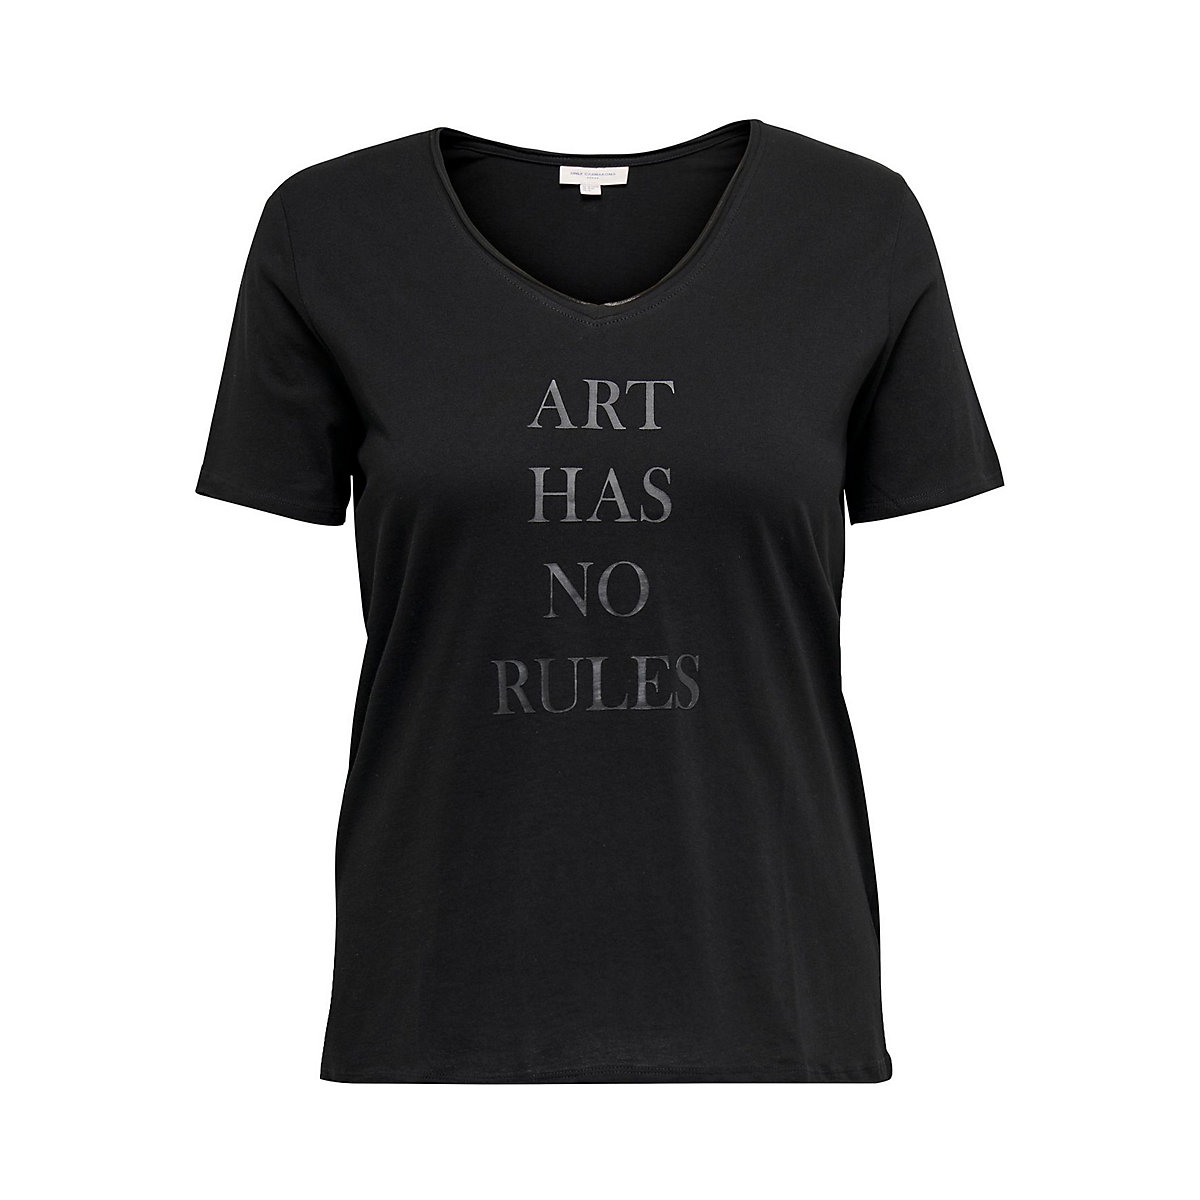 ONLY CARMAKOMA Bedrucktes Spruch T-Shirt Übergröße Plus Size Top CARQUOTE schwarz